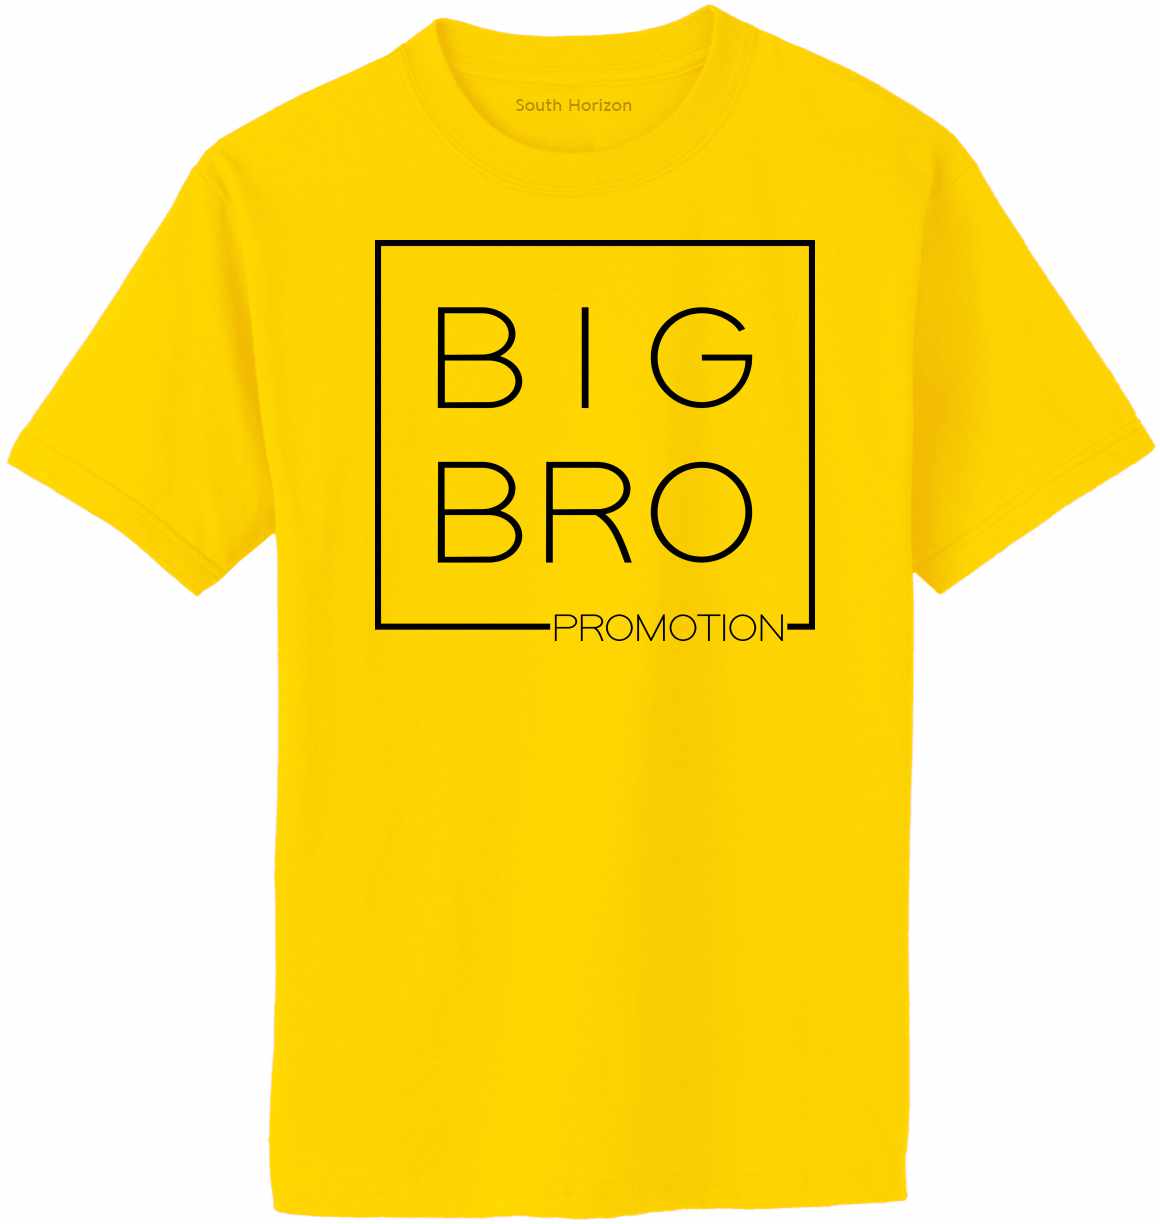 Big Bro Promotion - Big Brother - Box on Adult T-Shirt (#1330-1)